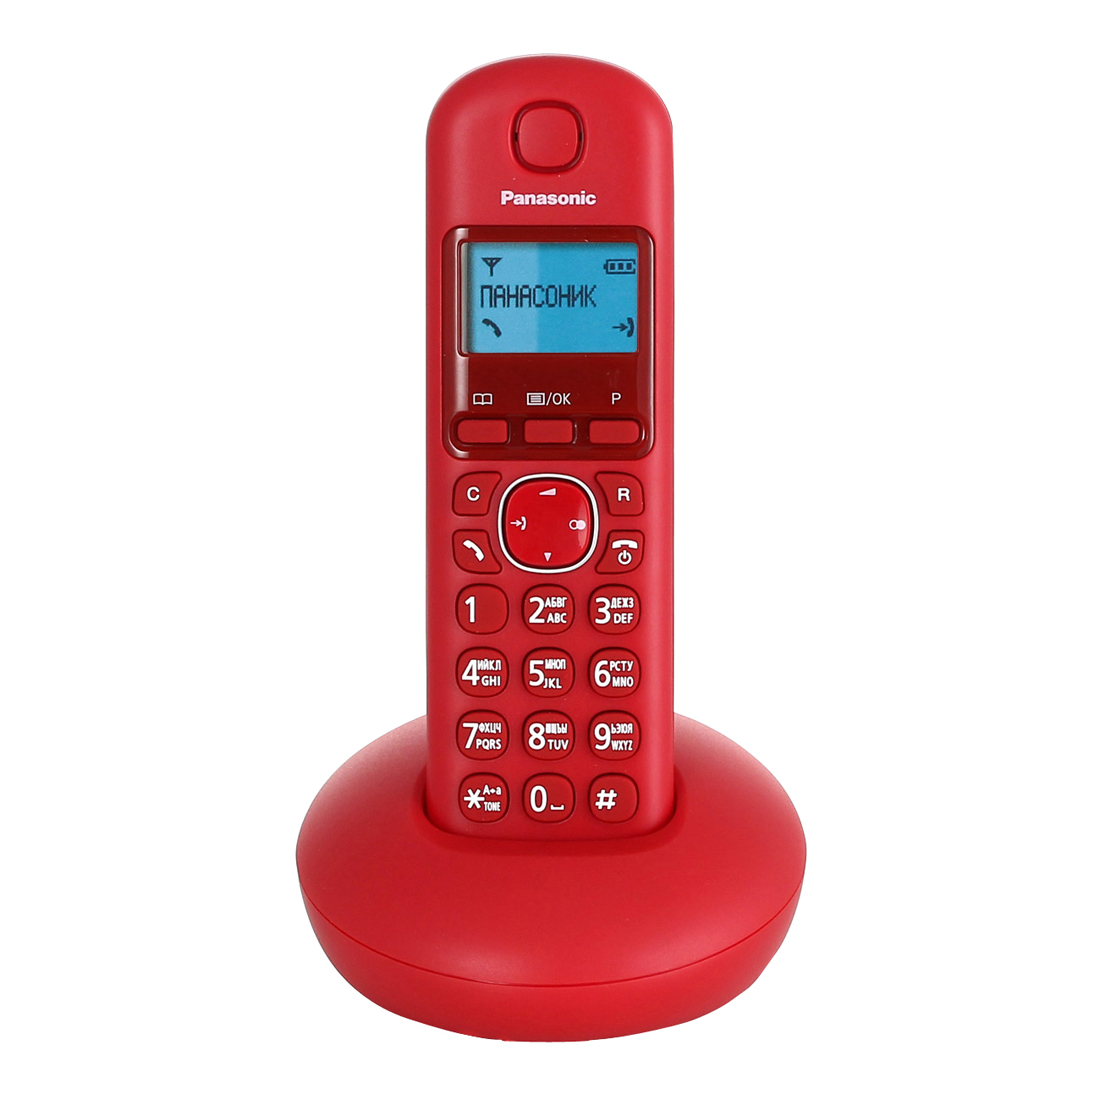 Телефон панасоник радио. Панасоник 210 радиотелефон красный. Panasonic KX-tgb210. Panasonic KX-tgb210rur. Телефон DECT Panasonic KX-tgb210rur.